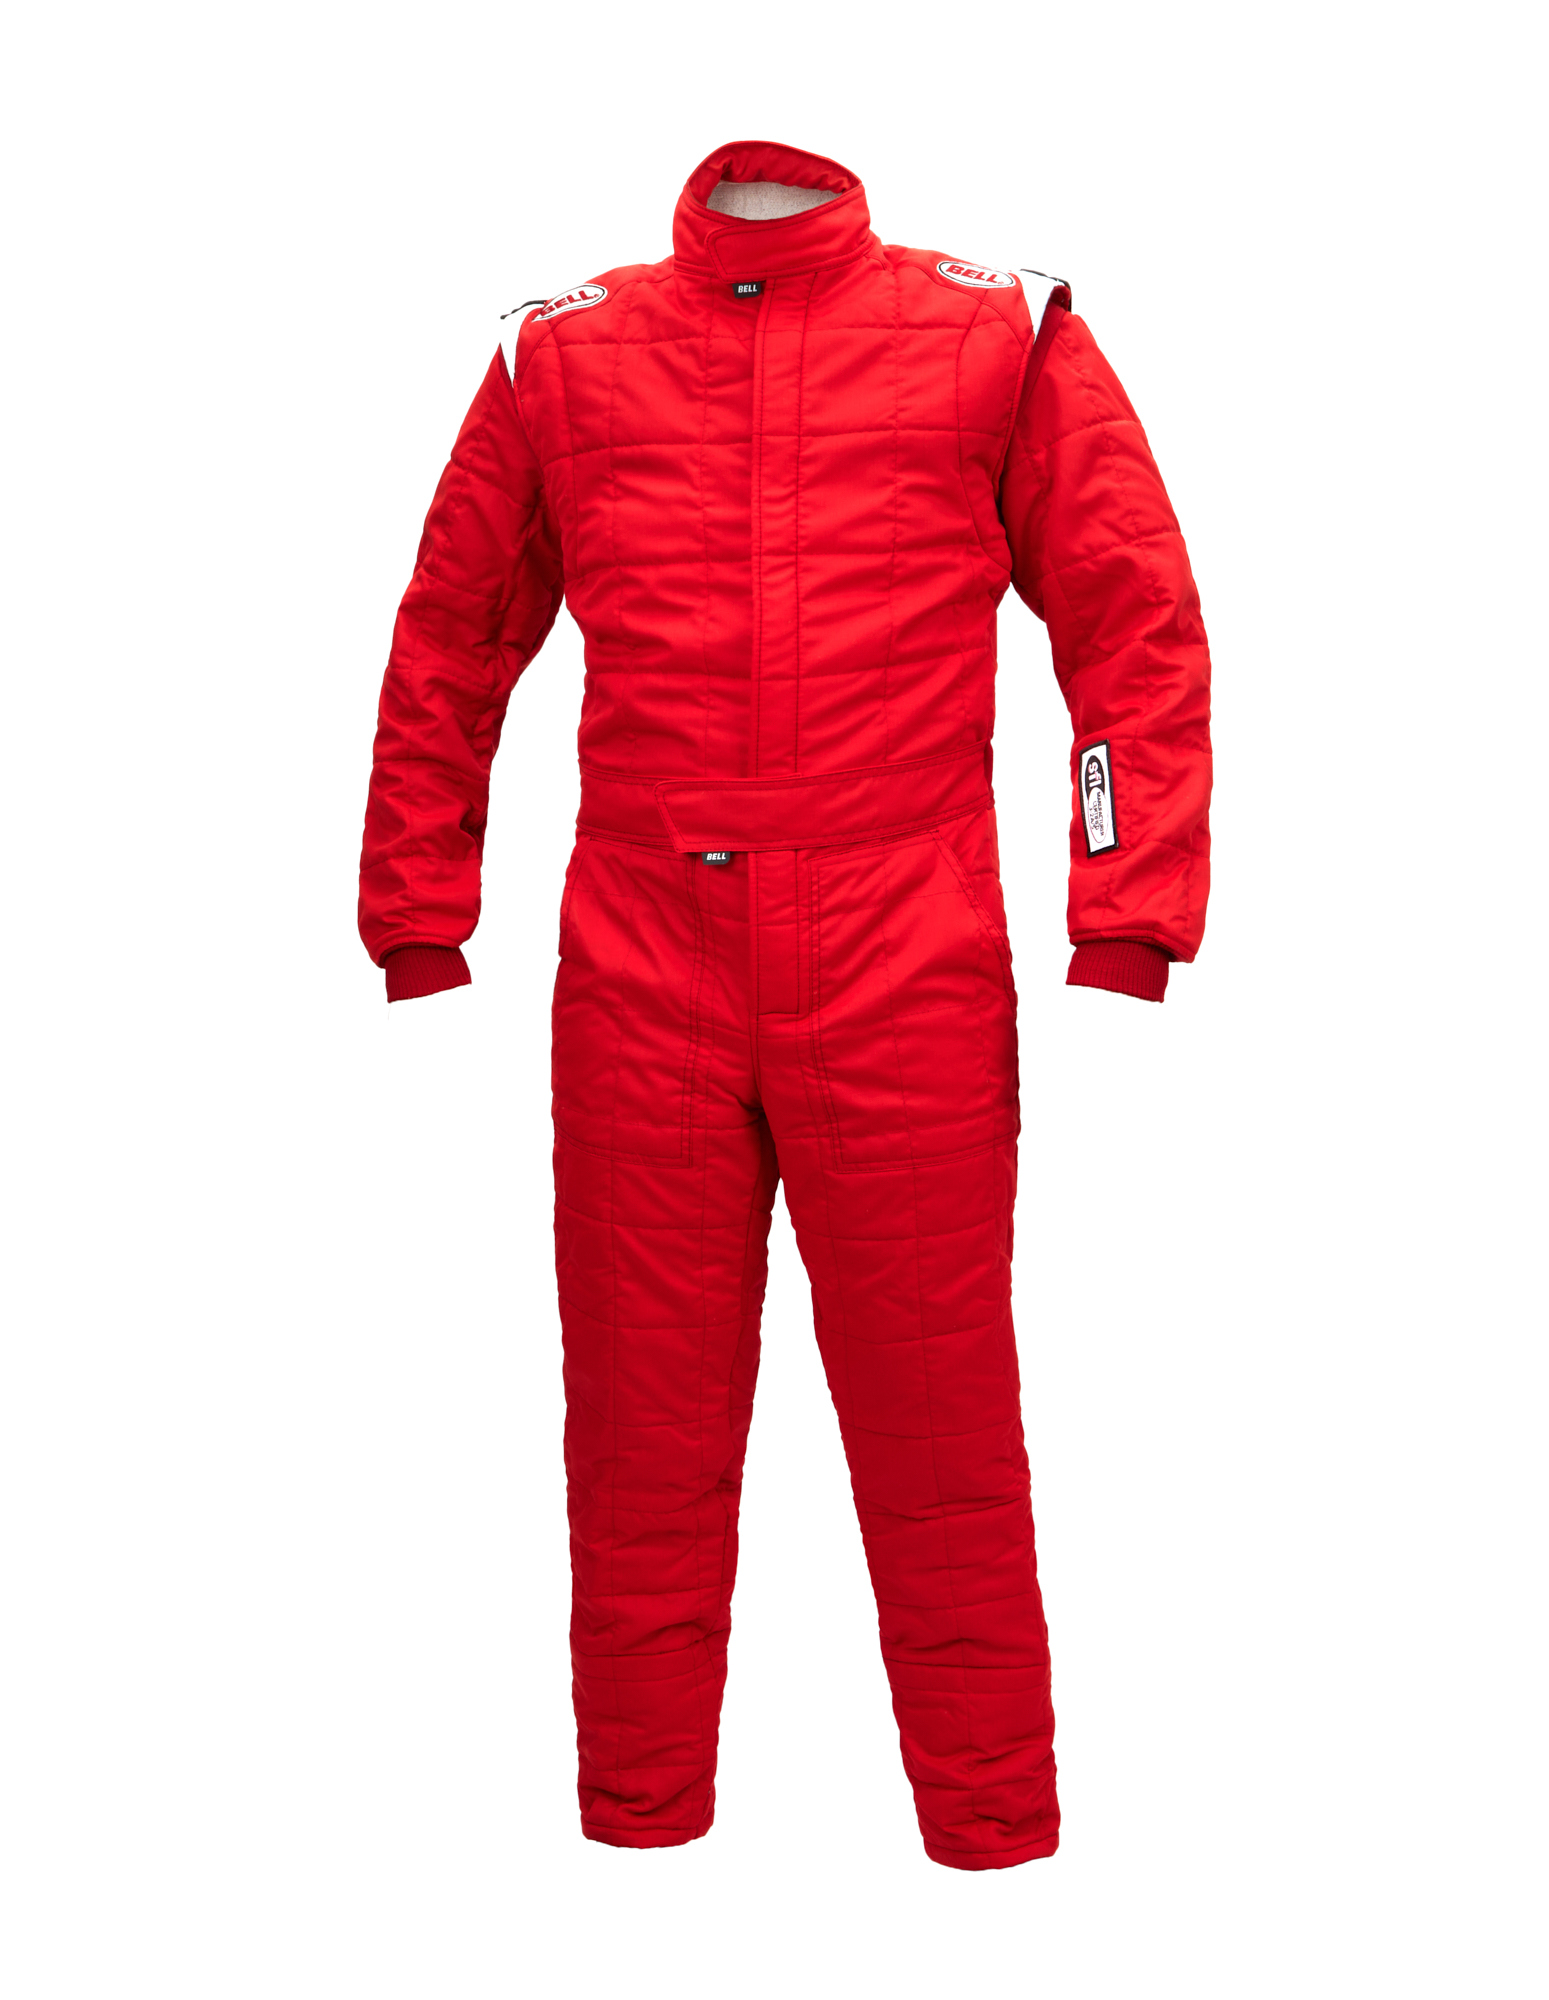 Bell Sport-TX Suit Red Medium (50-52) SFI 3.2A/5 - BR10072